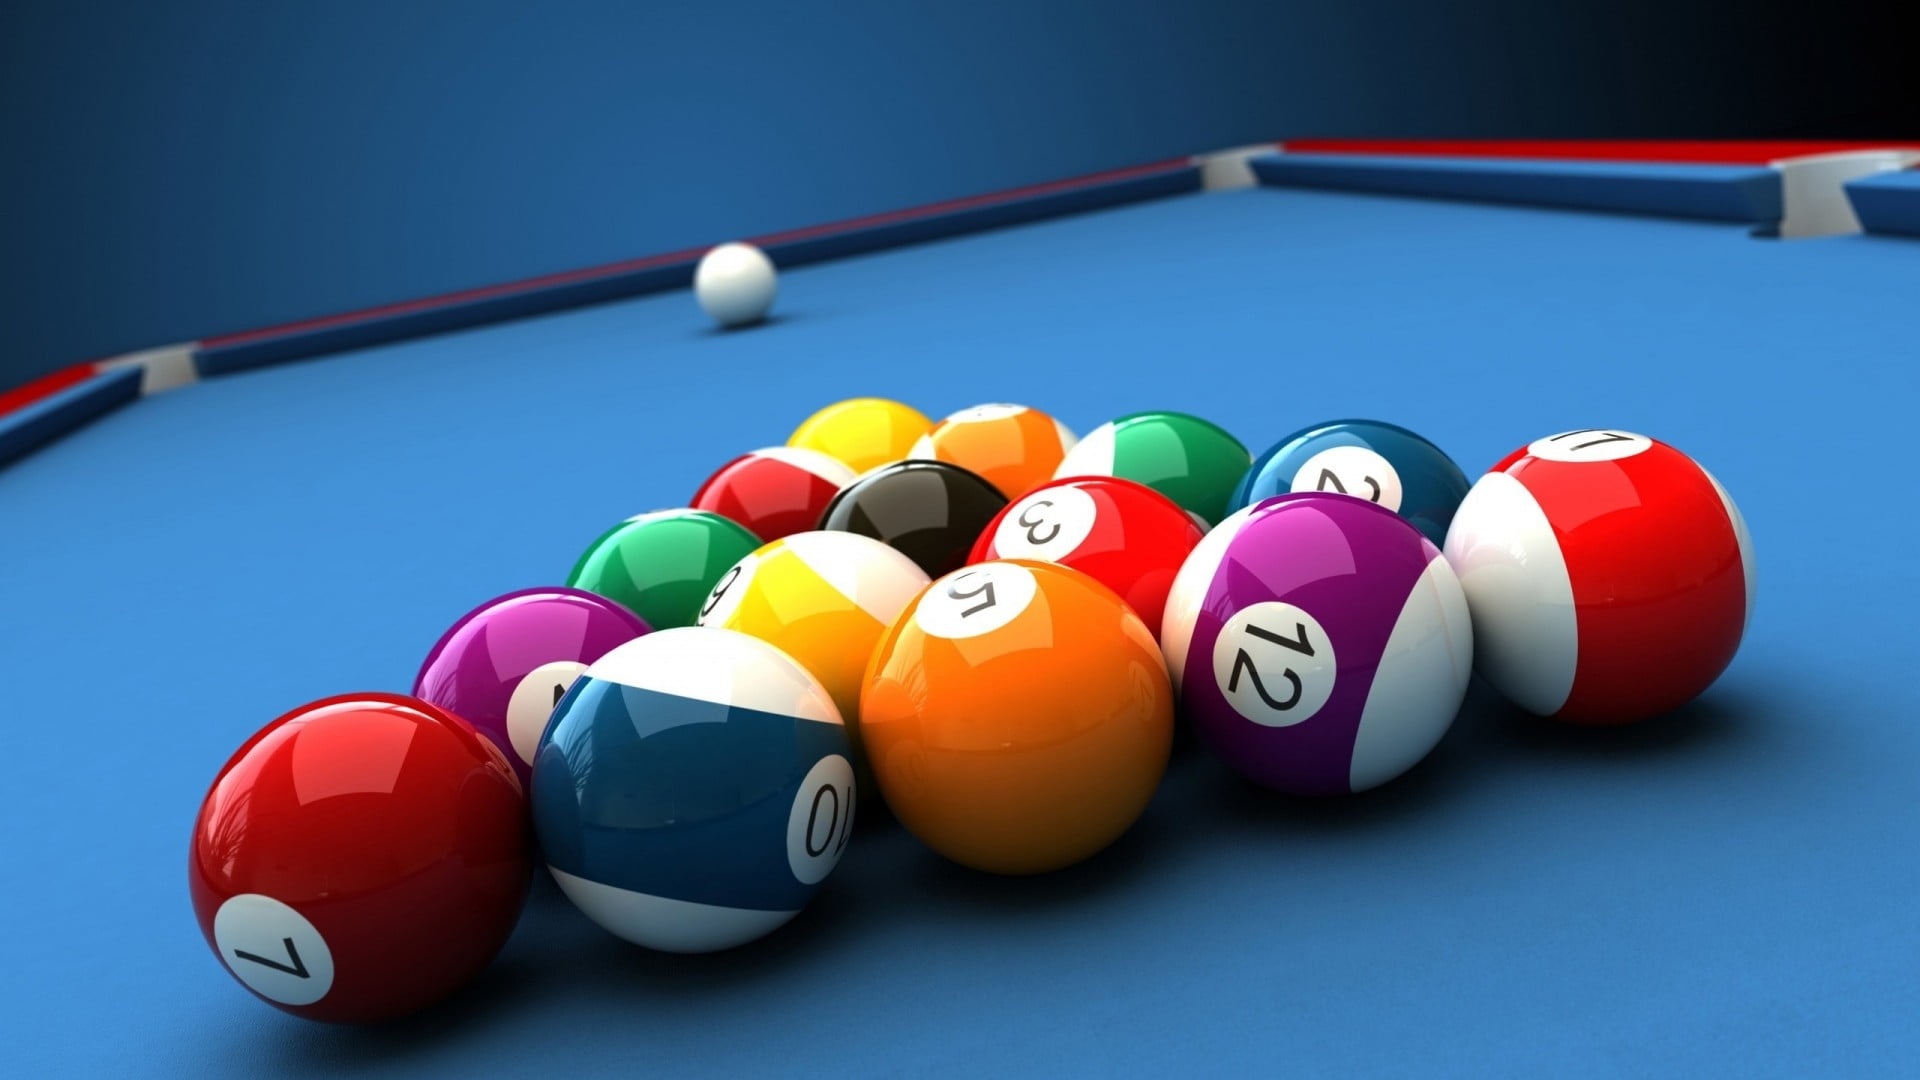 pool table set, billiard balls, colorful, numbers, closeup, depth of field